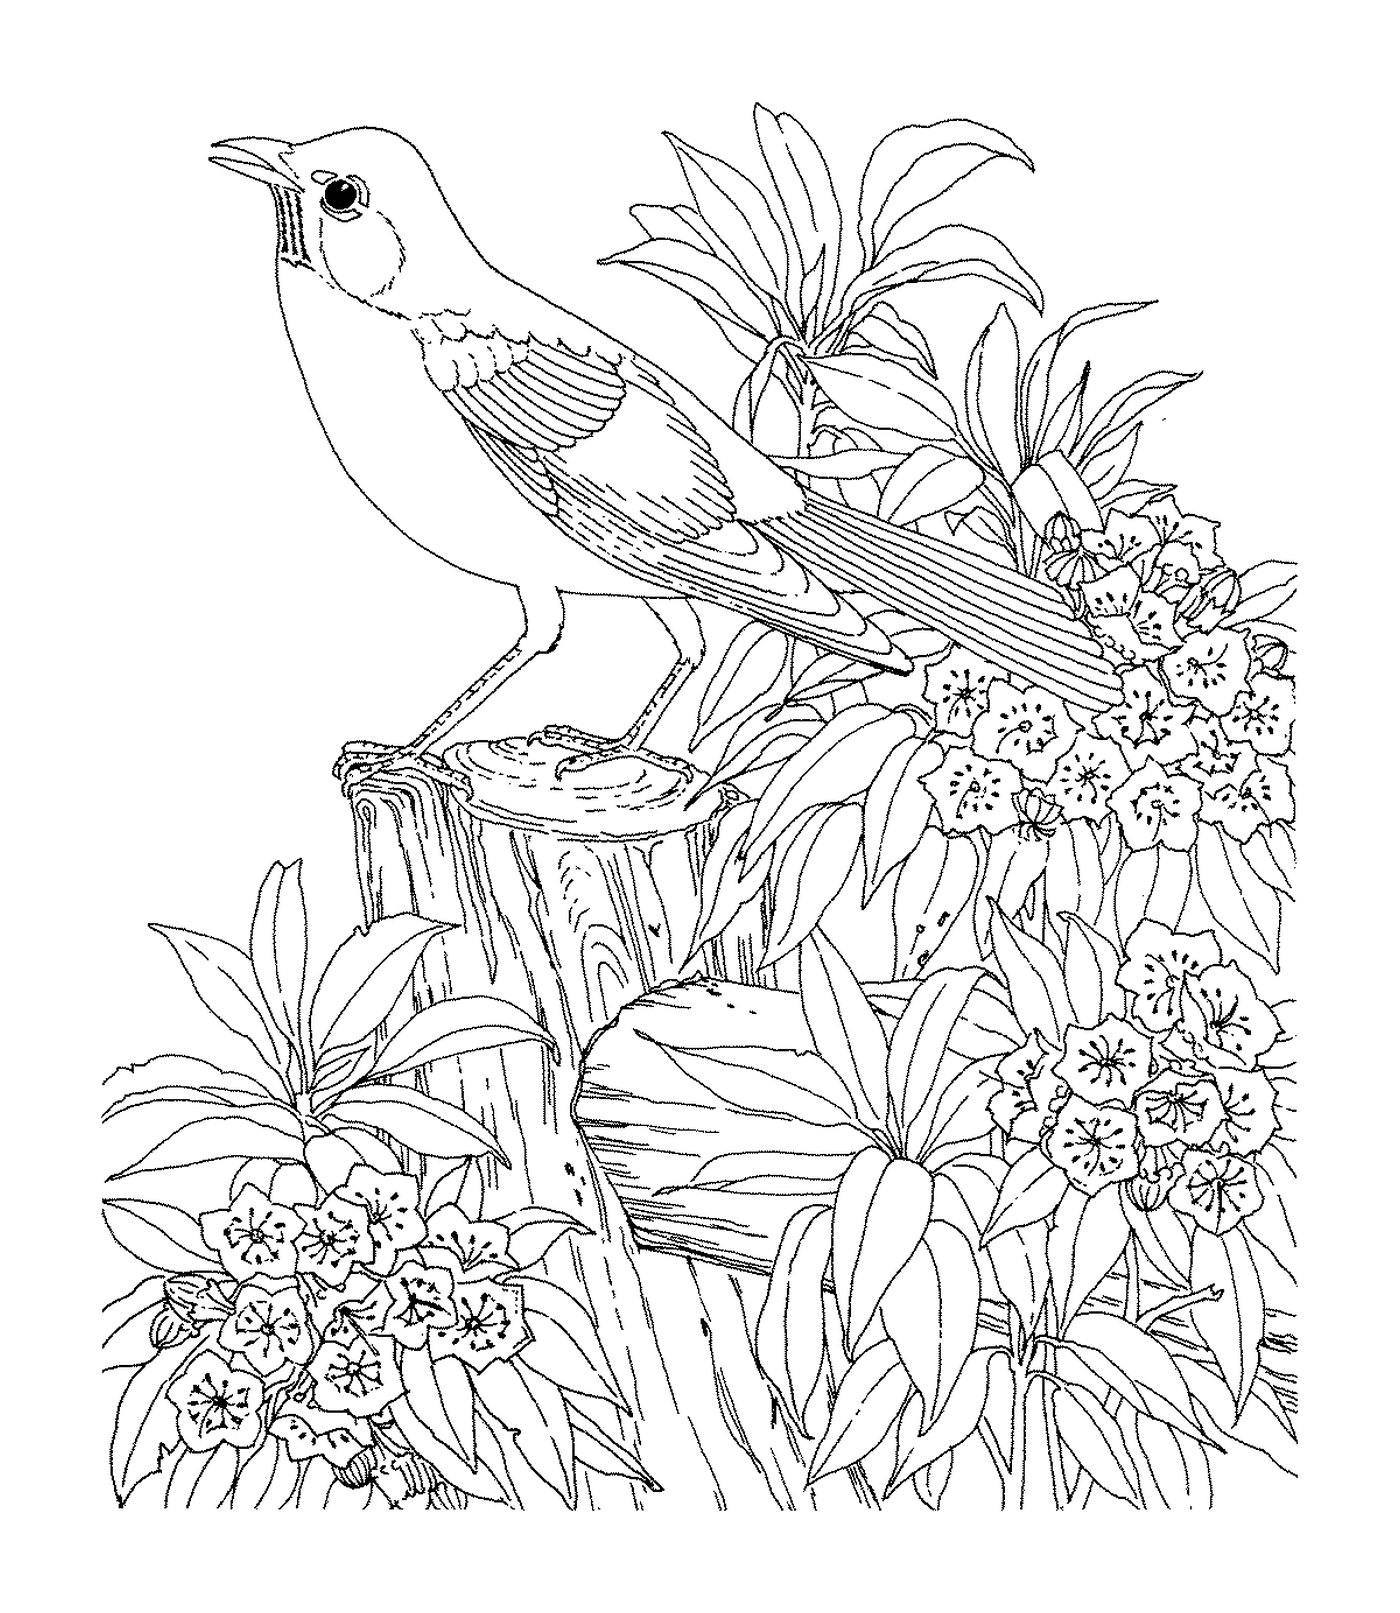  A bird sitting on a branch 